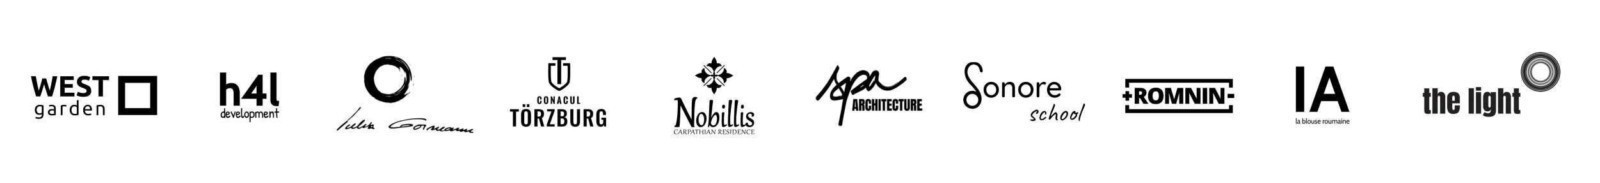 logo, logo design, design, logo for brands, by Toud, creare logo, branding